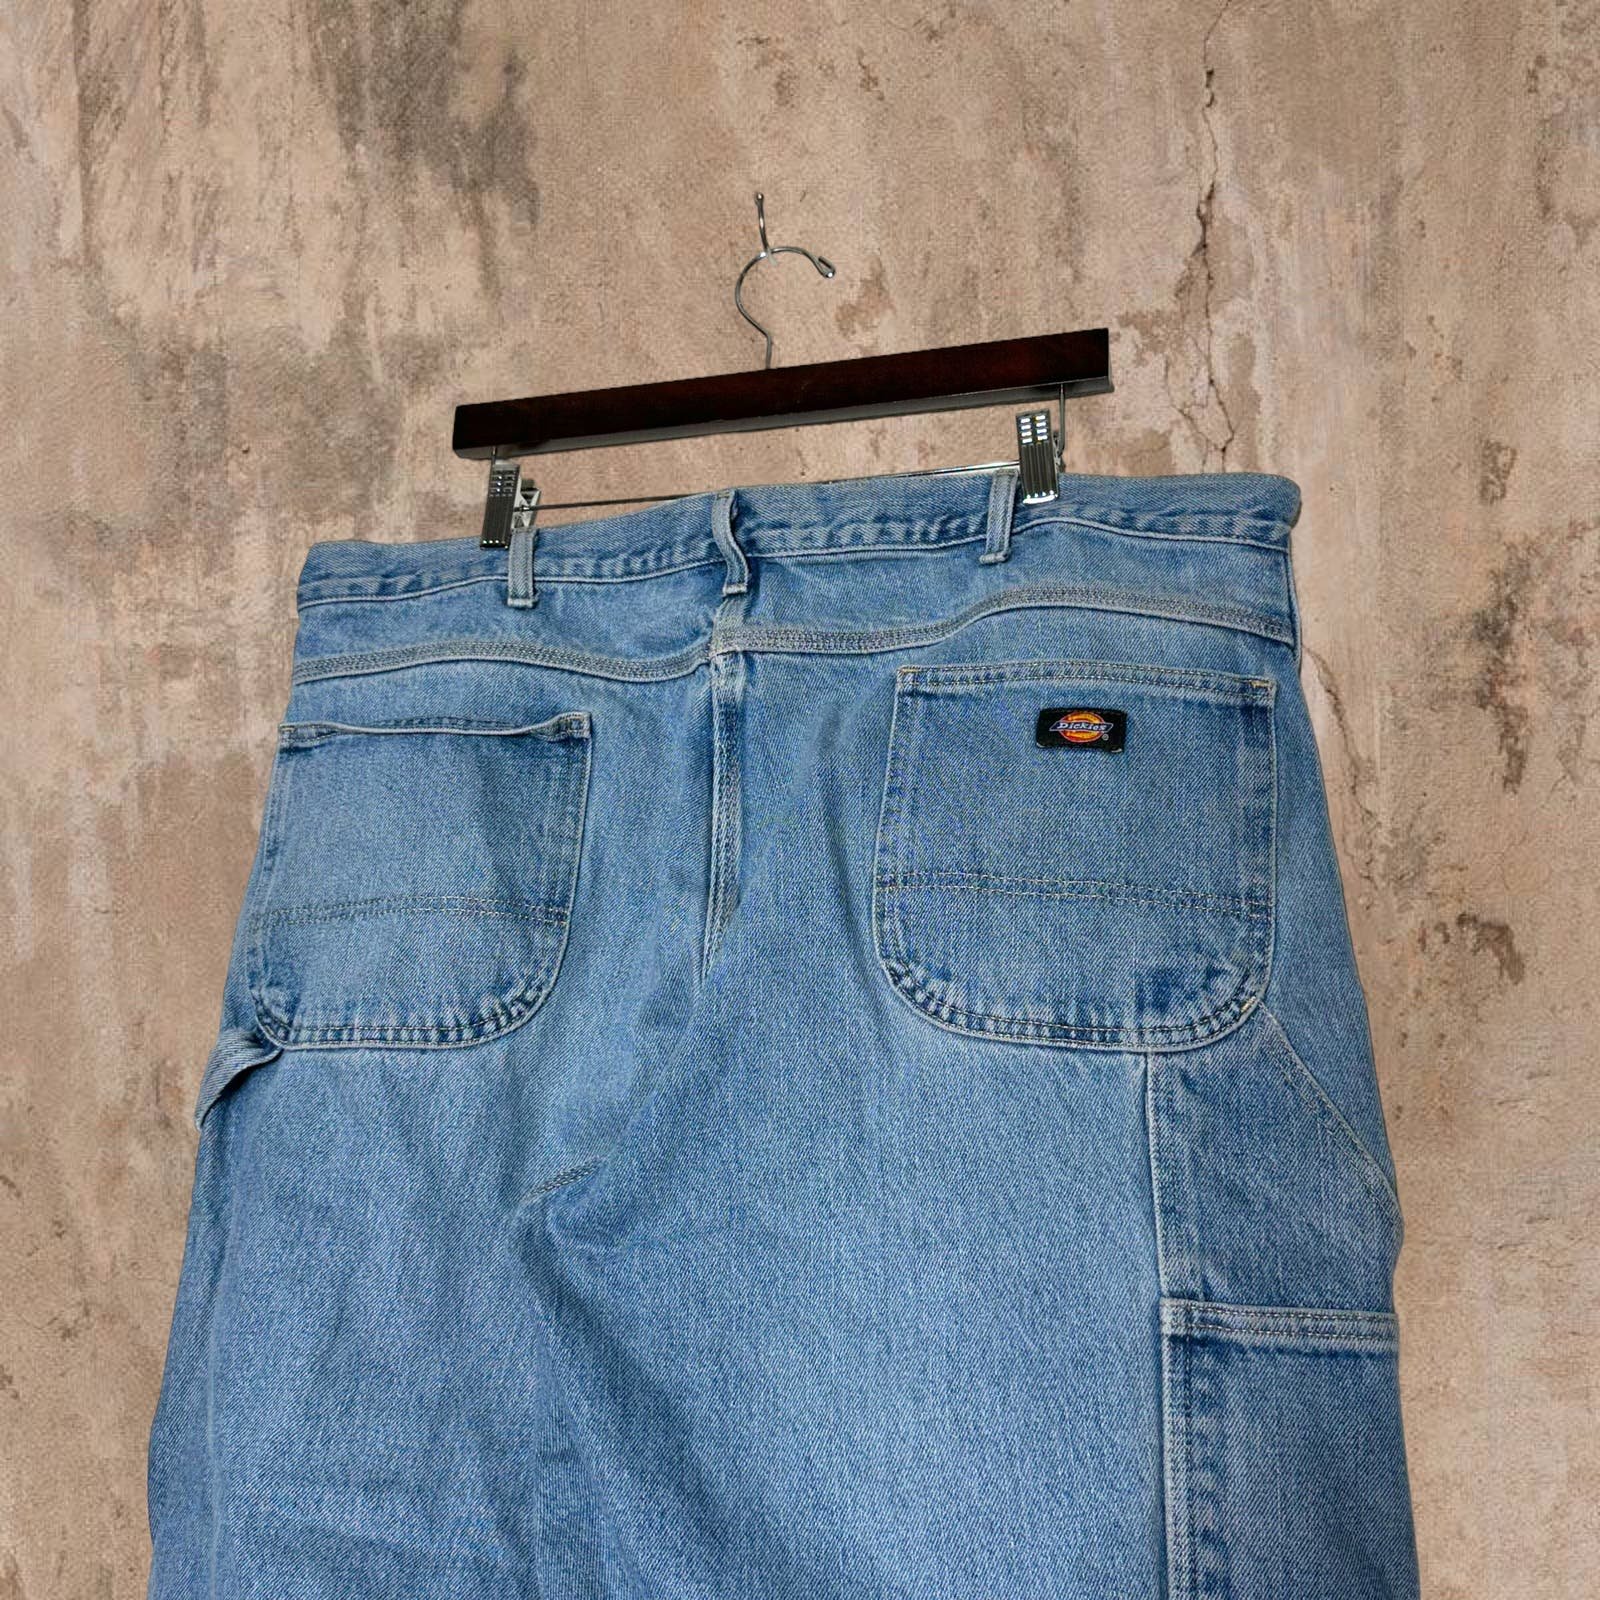 Dickies Carpenter Jeans Light Wash Denim Baggy Fit Blac